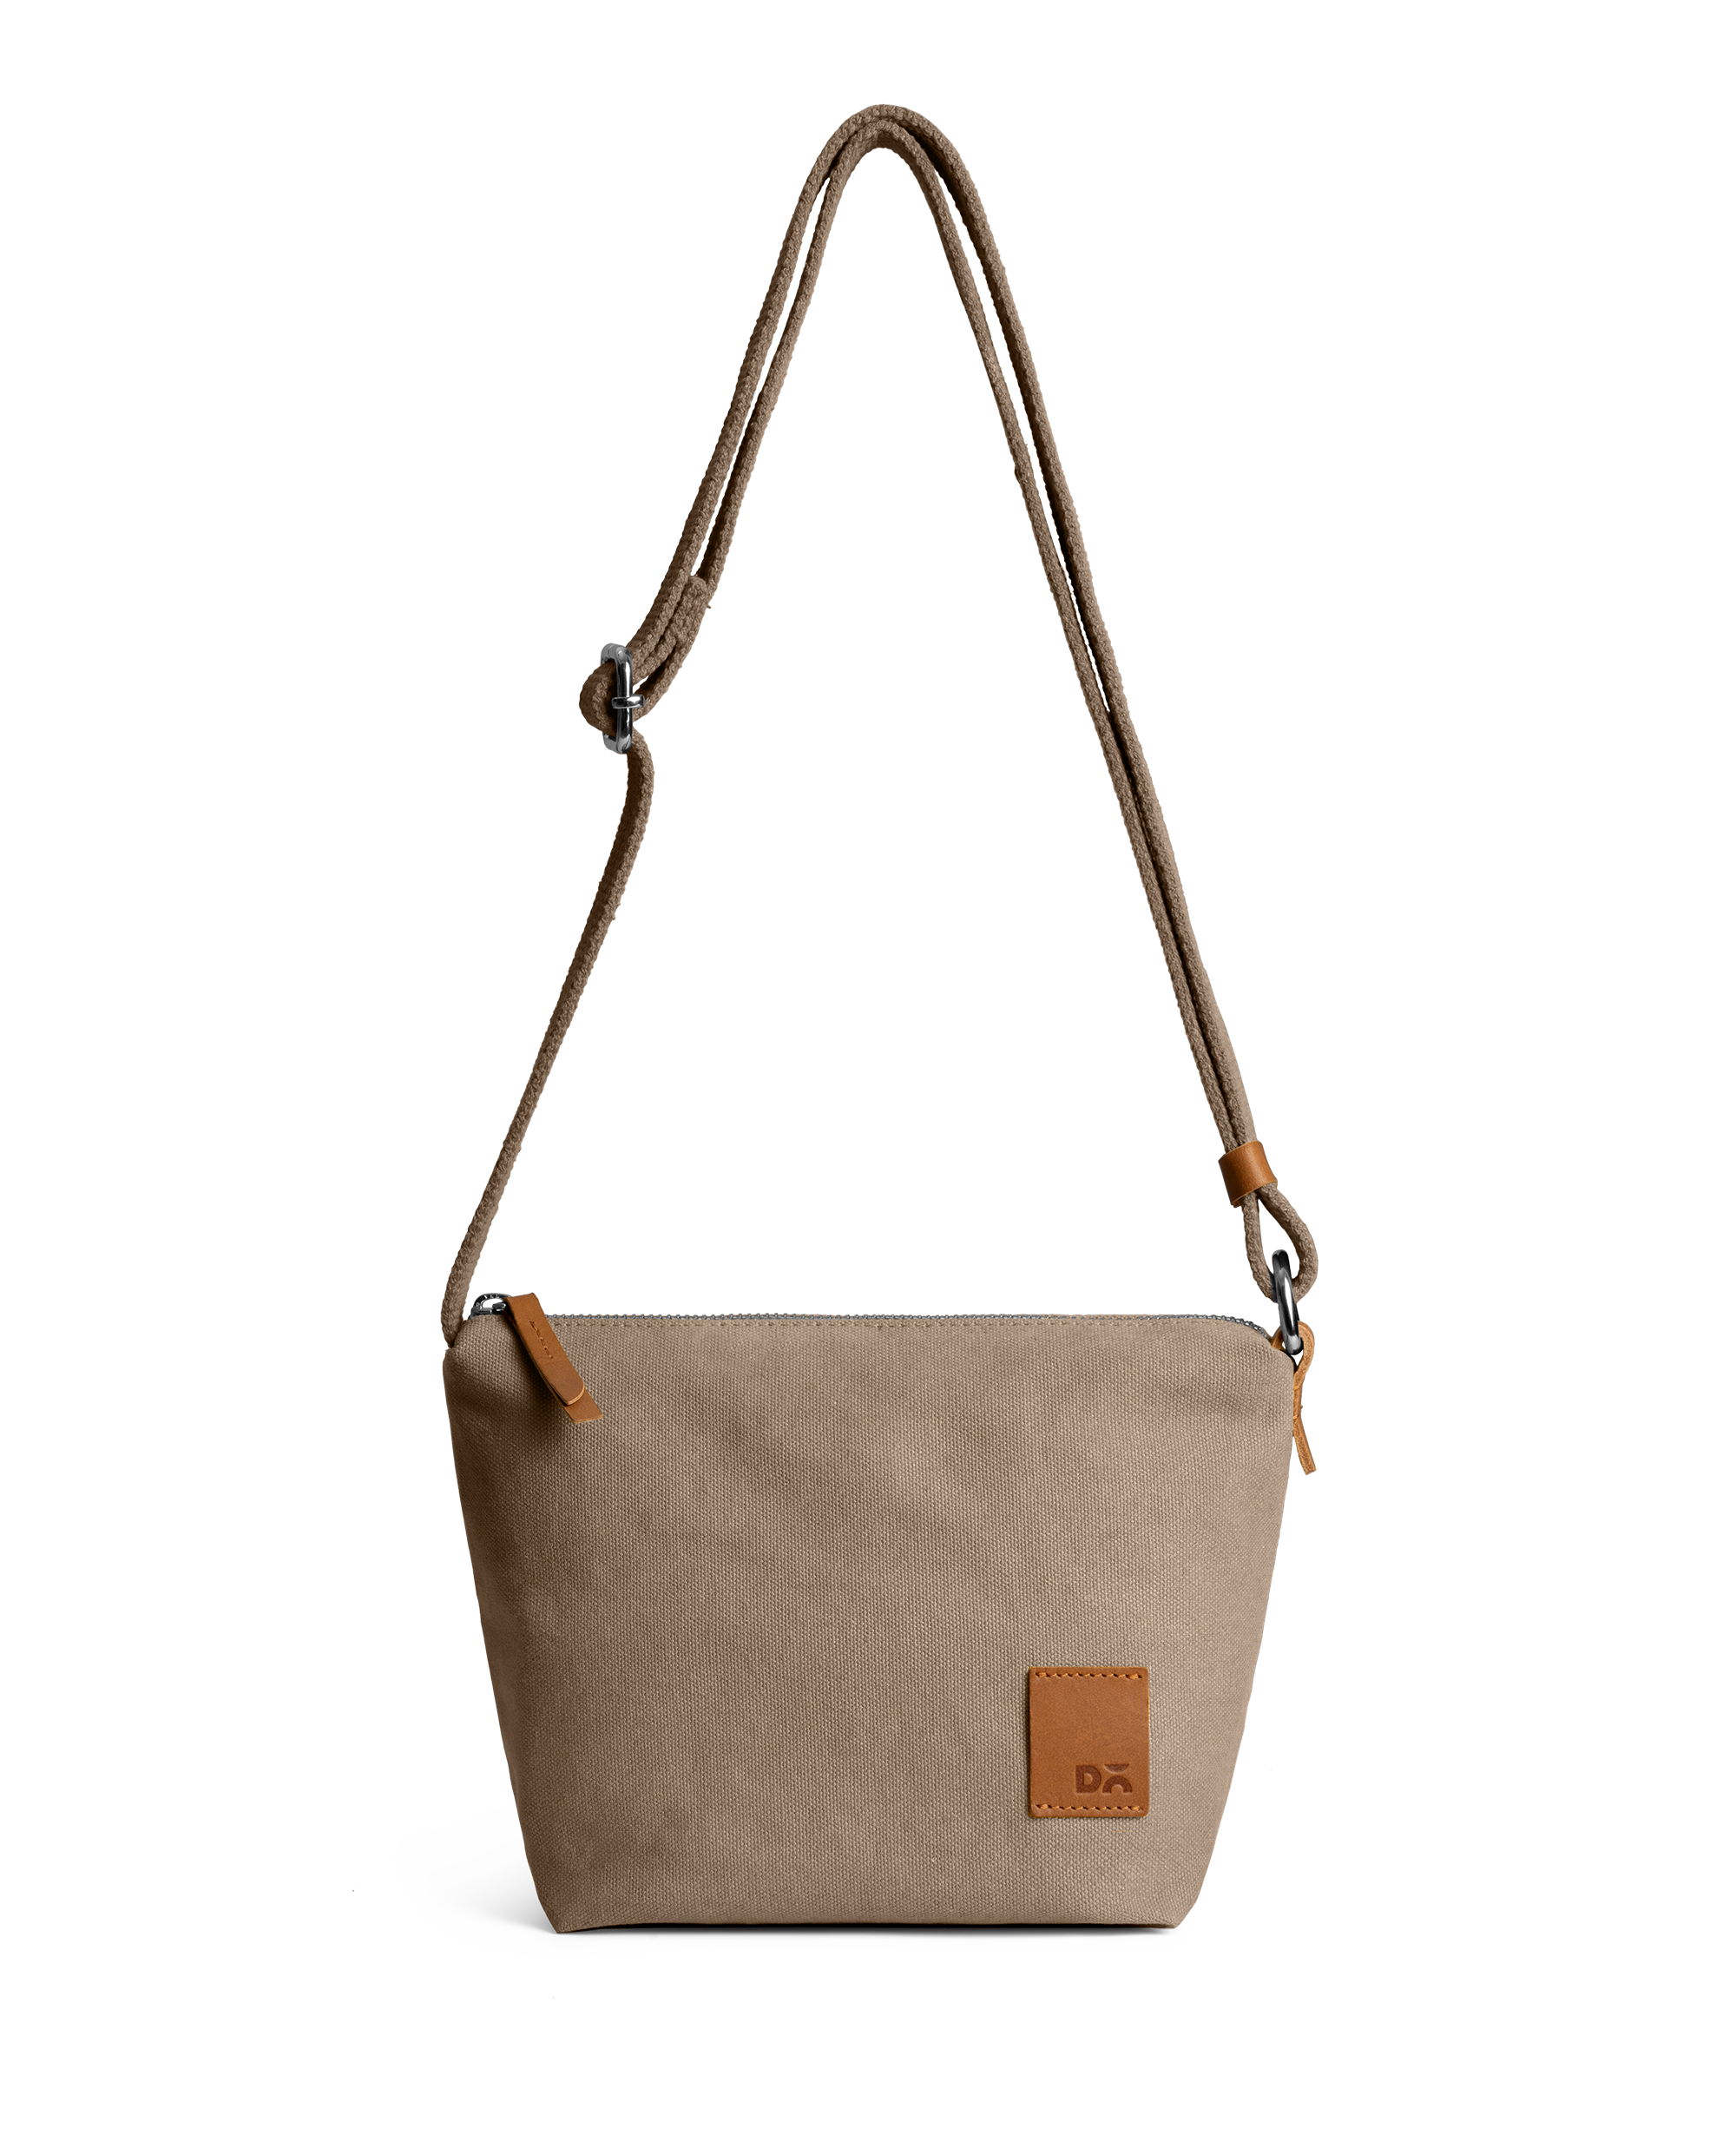 In-Vogue ELLE Paris Duffle Bag, Travel Bag, Versatile ELLE Tote Bag, Big 25  x 15